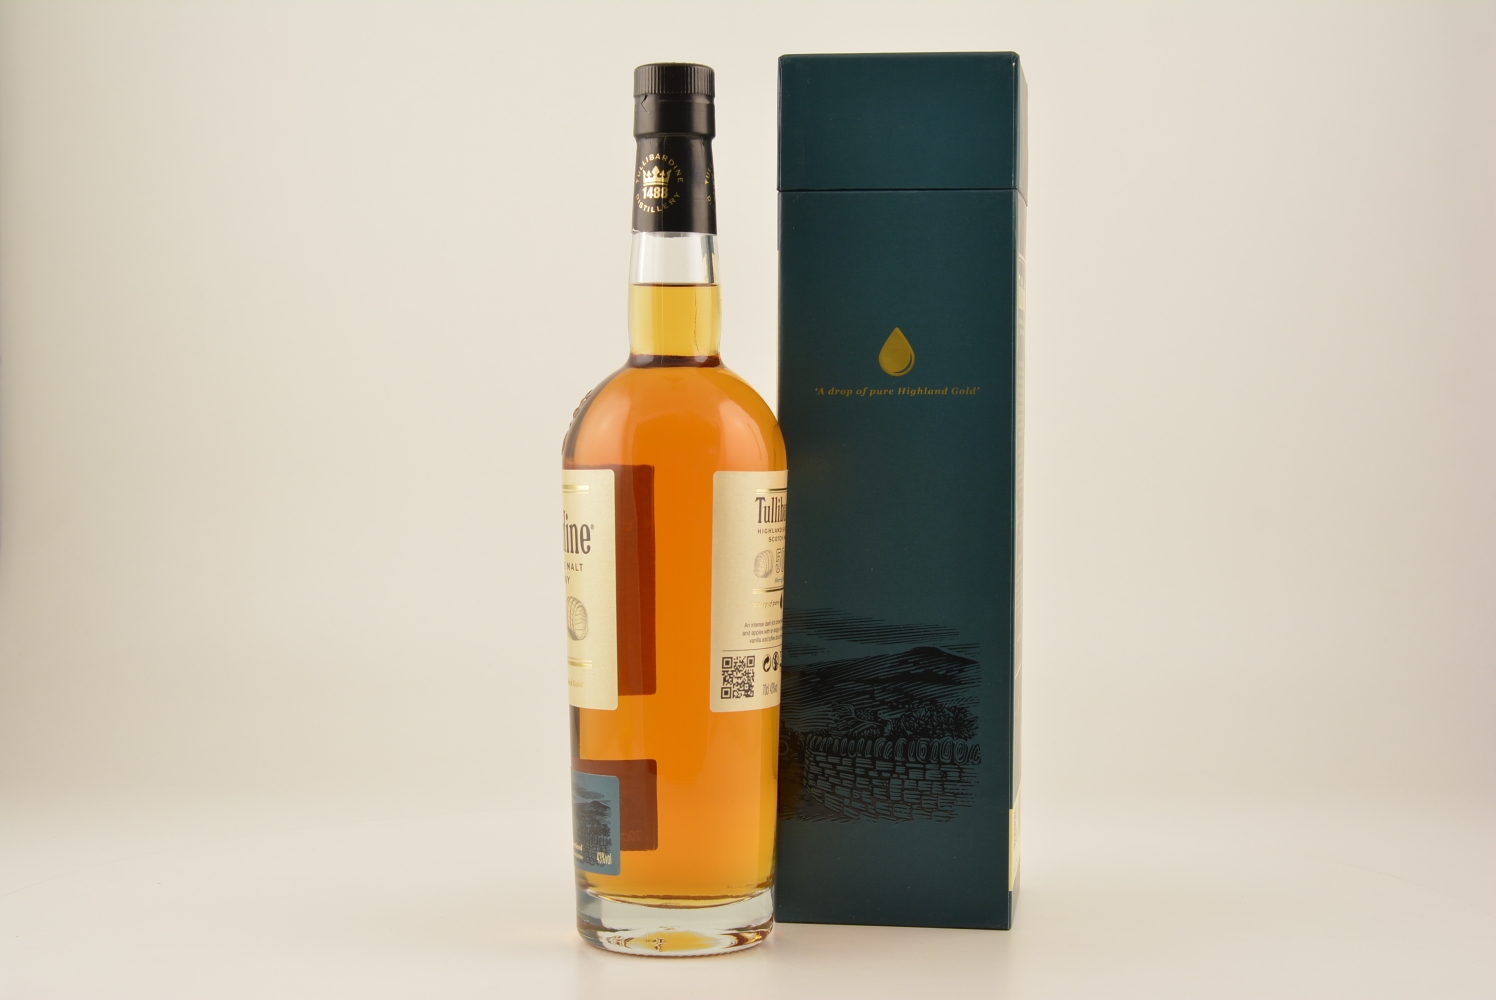 Tullibardine Sherry Finish Highland Single Malt Scotch Whisky 43% 0,7l